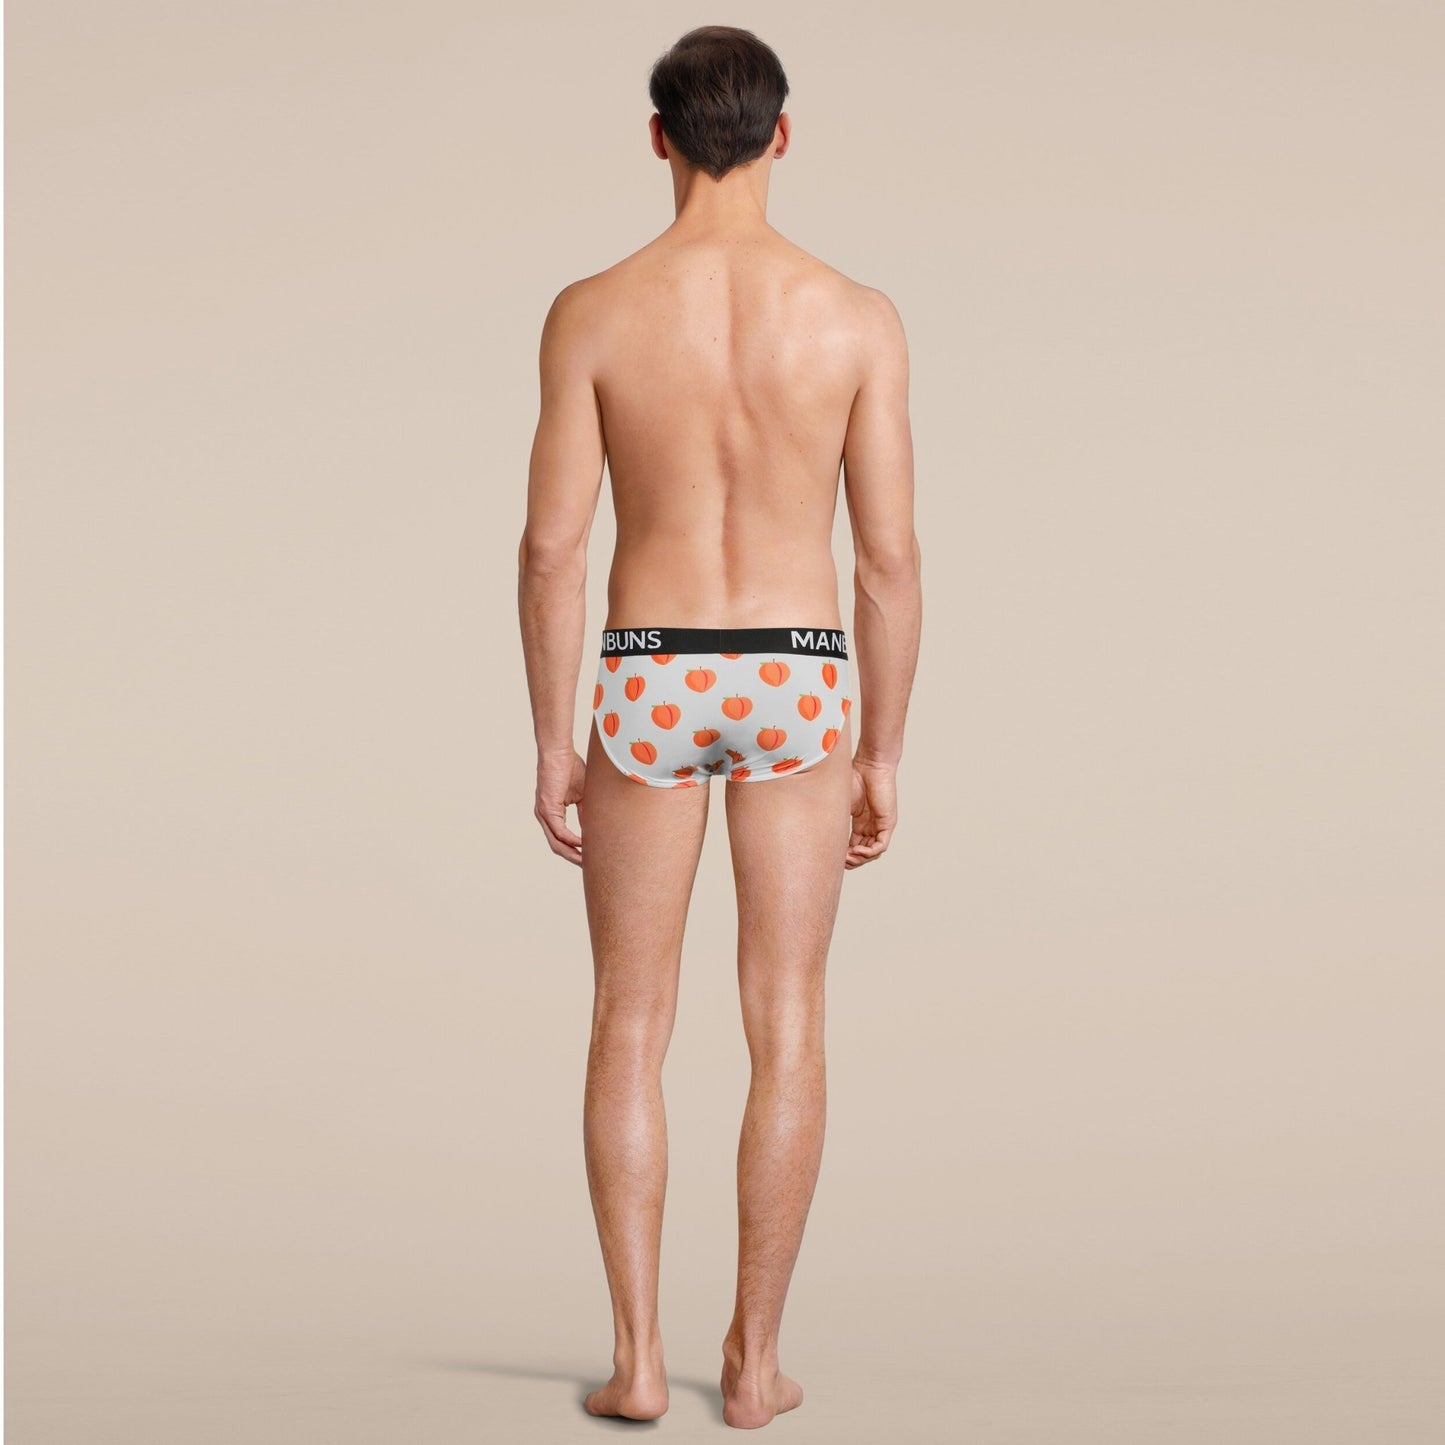 Men's Peach Brief Underwear - MANBUNS Underwear & Socks Free Shipping